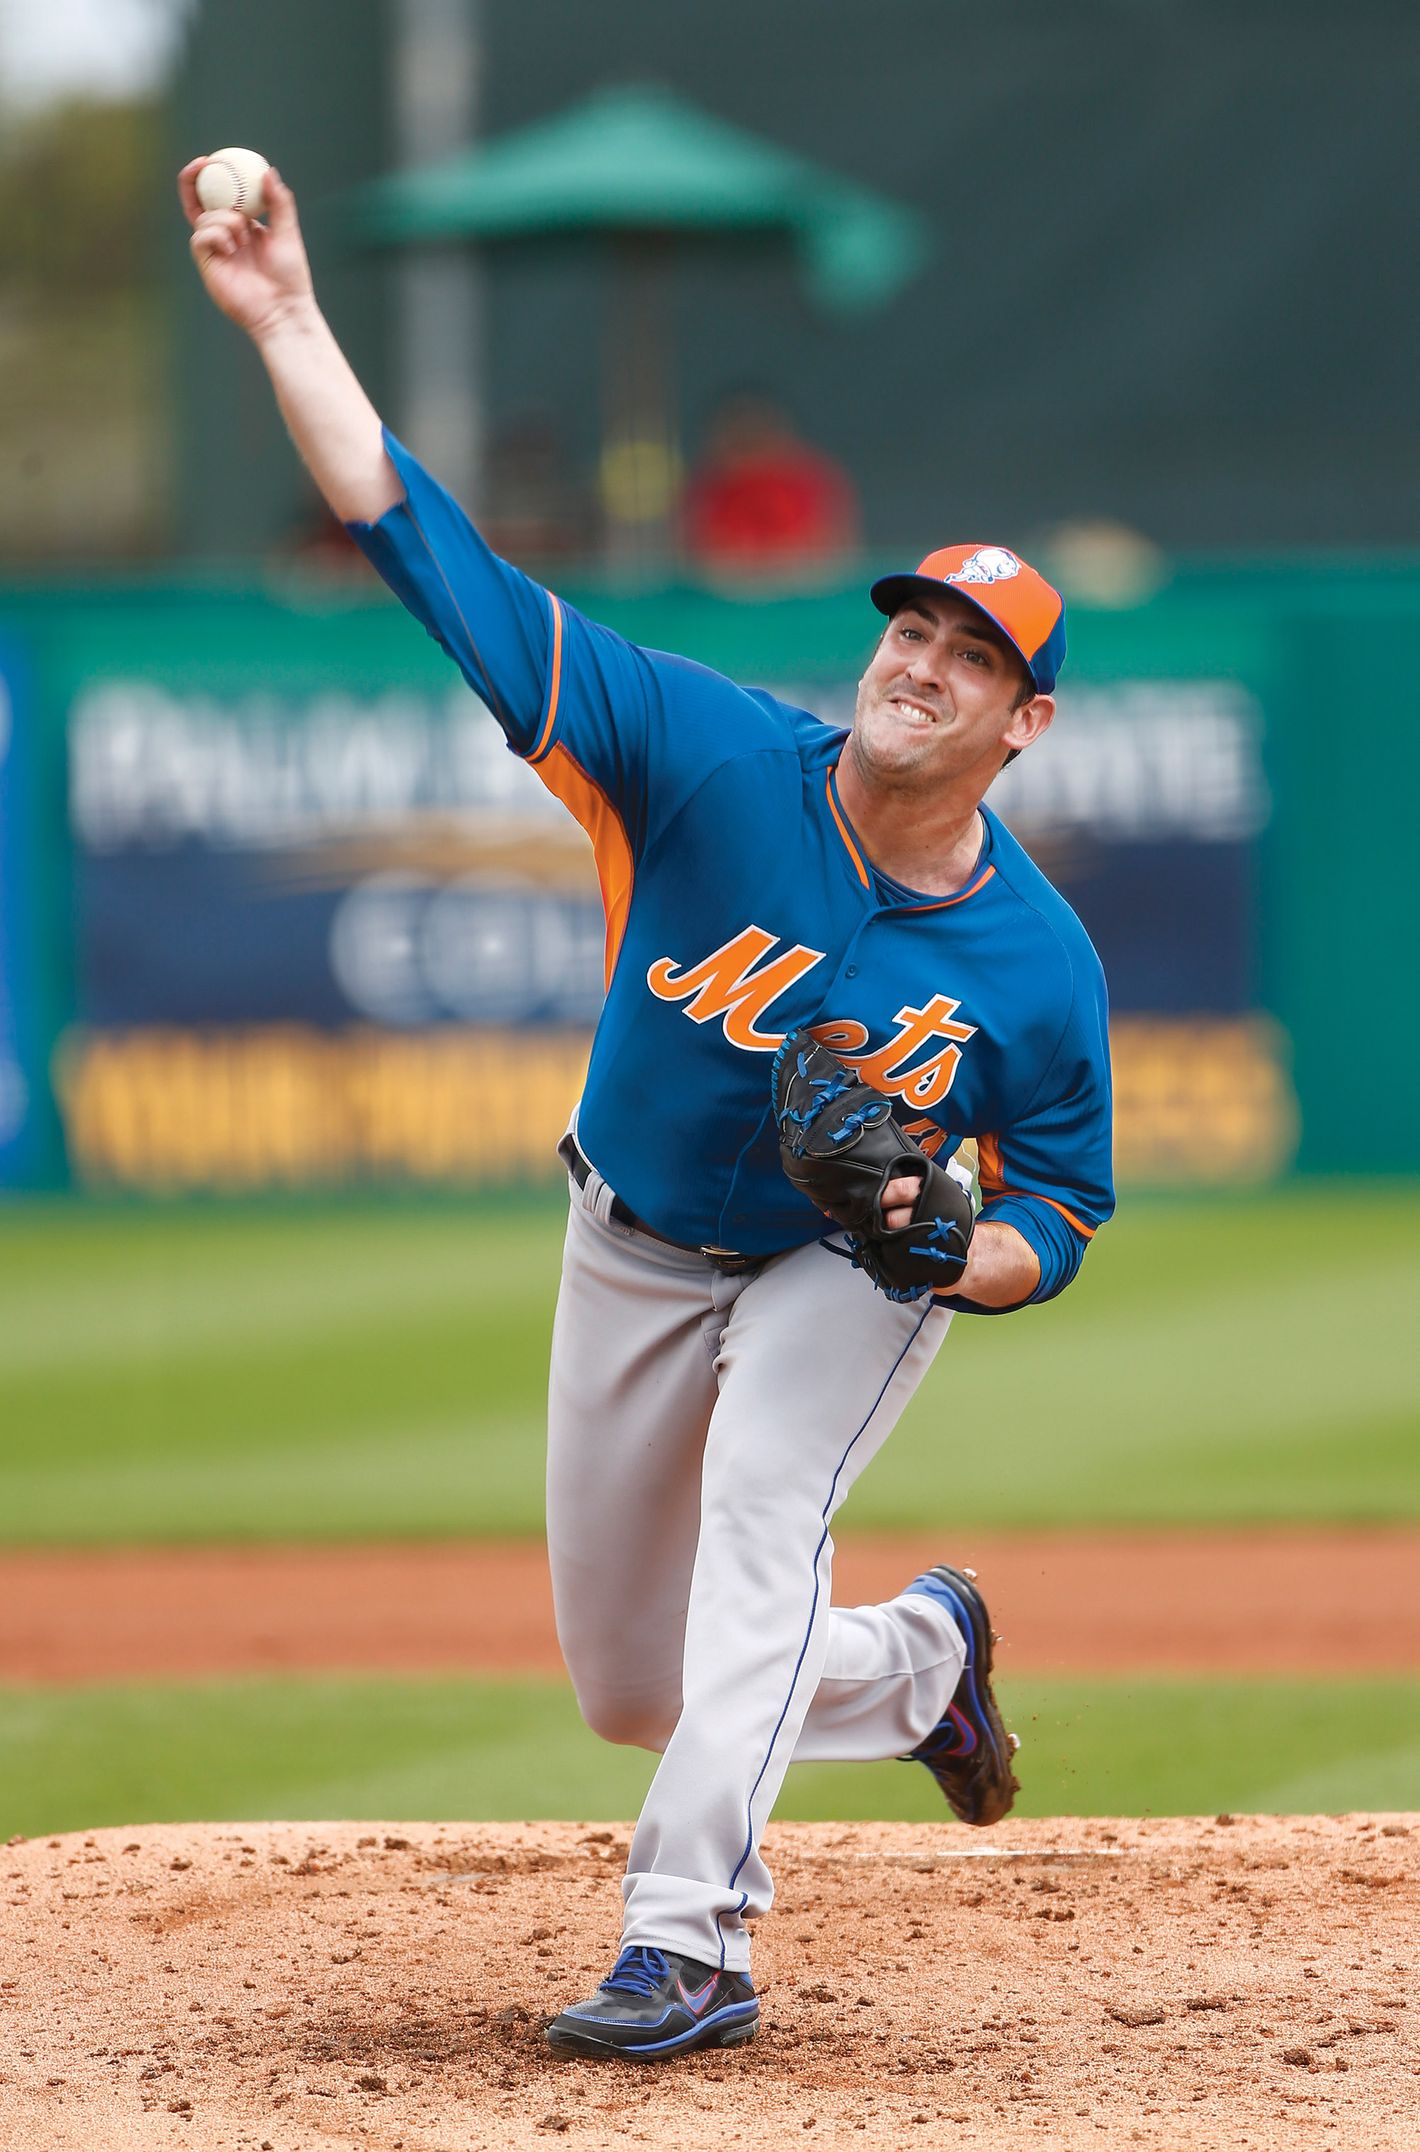 PICS] Matt Harvey: Photos Of The Baseball Pitcher & New York Mets